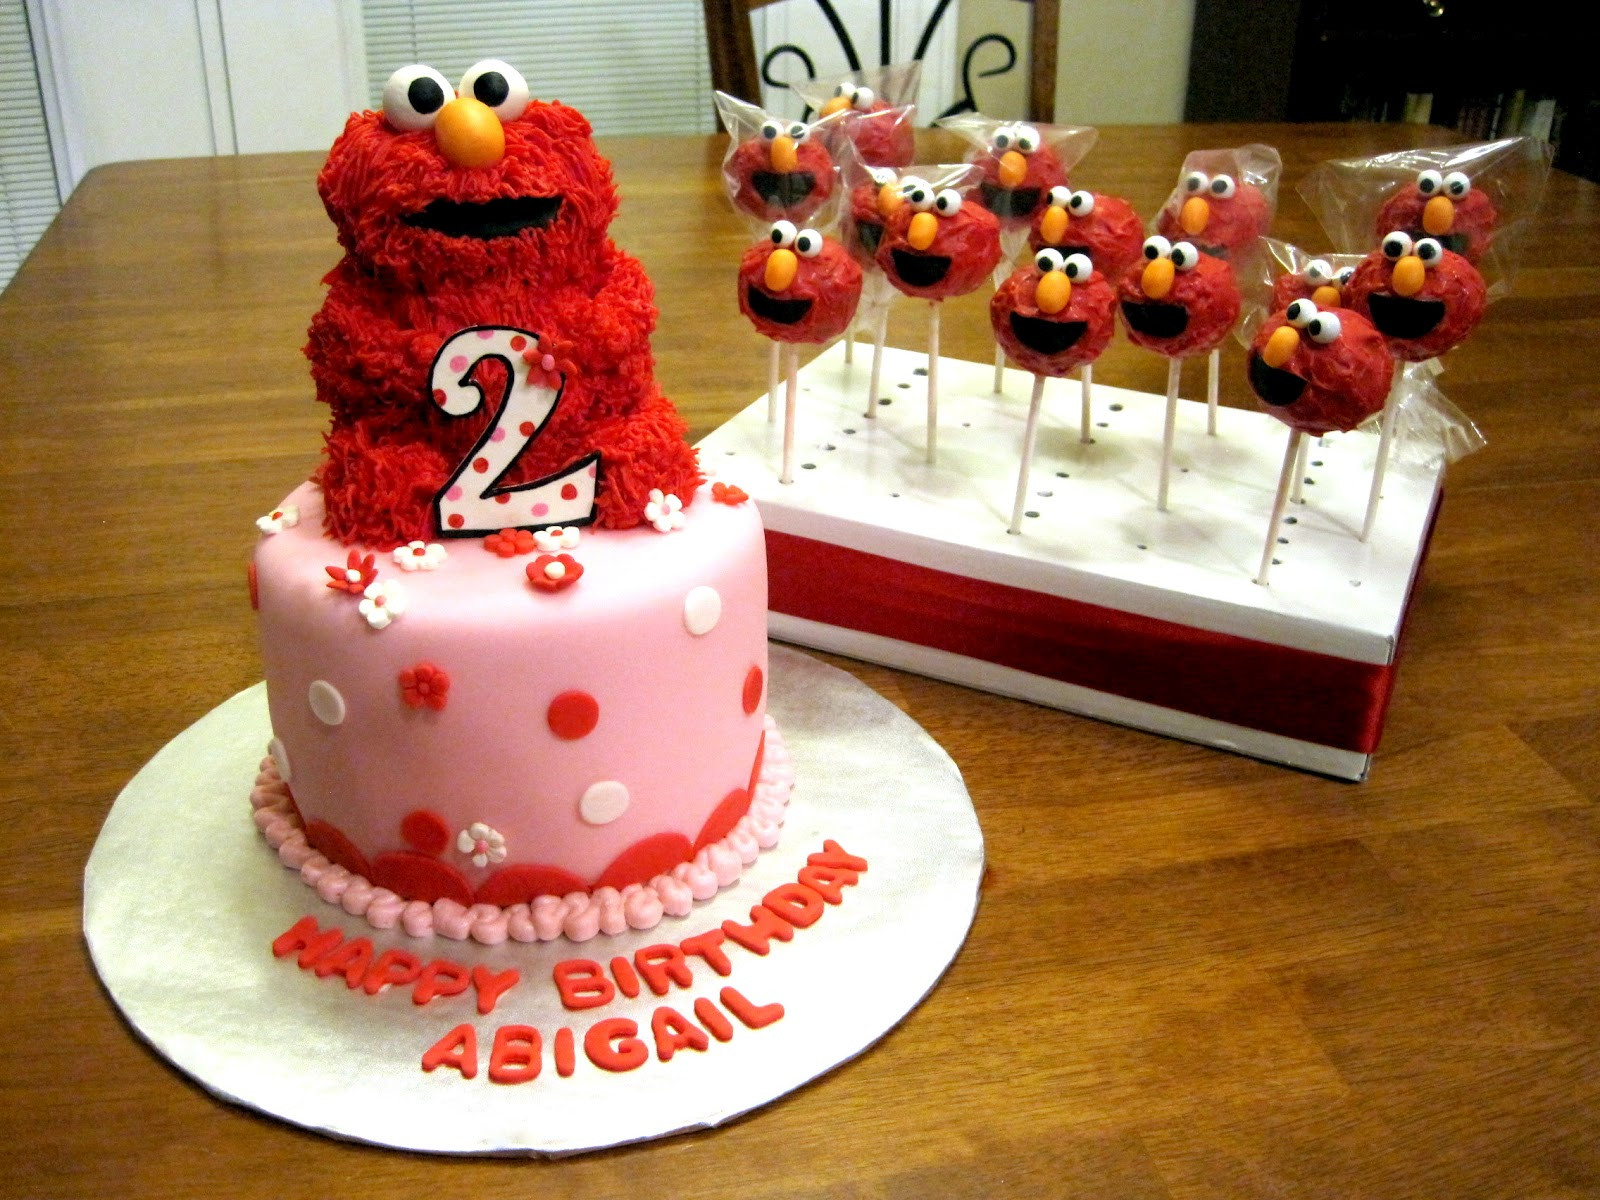 Elmo Birthday Cakes At Walmart
 Sams Club Elmo Cake Ideas and Designs